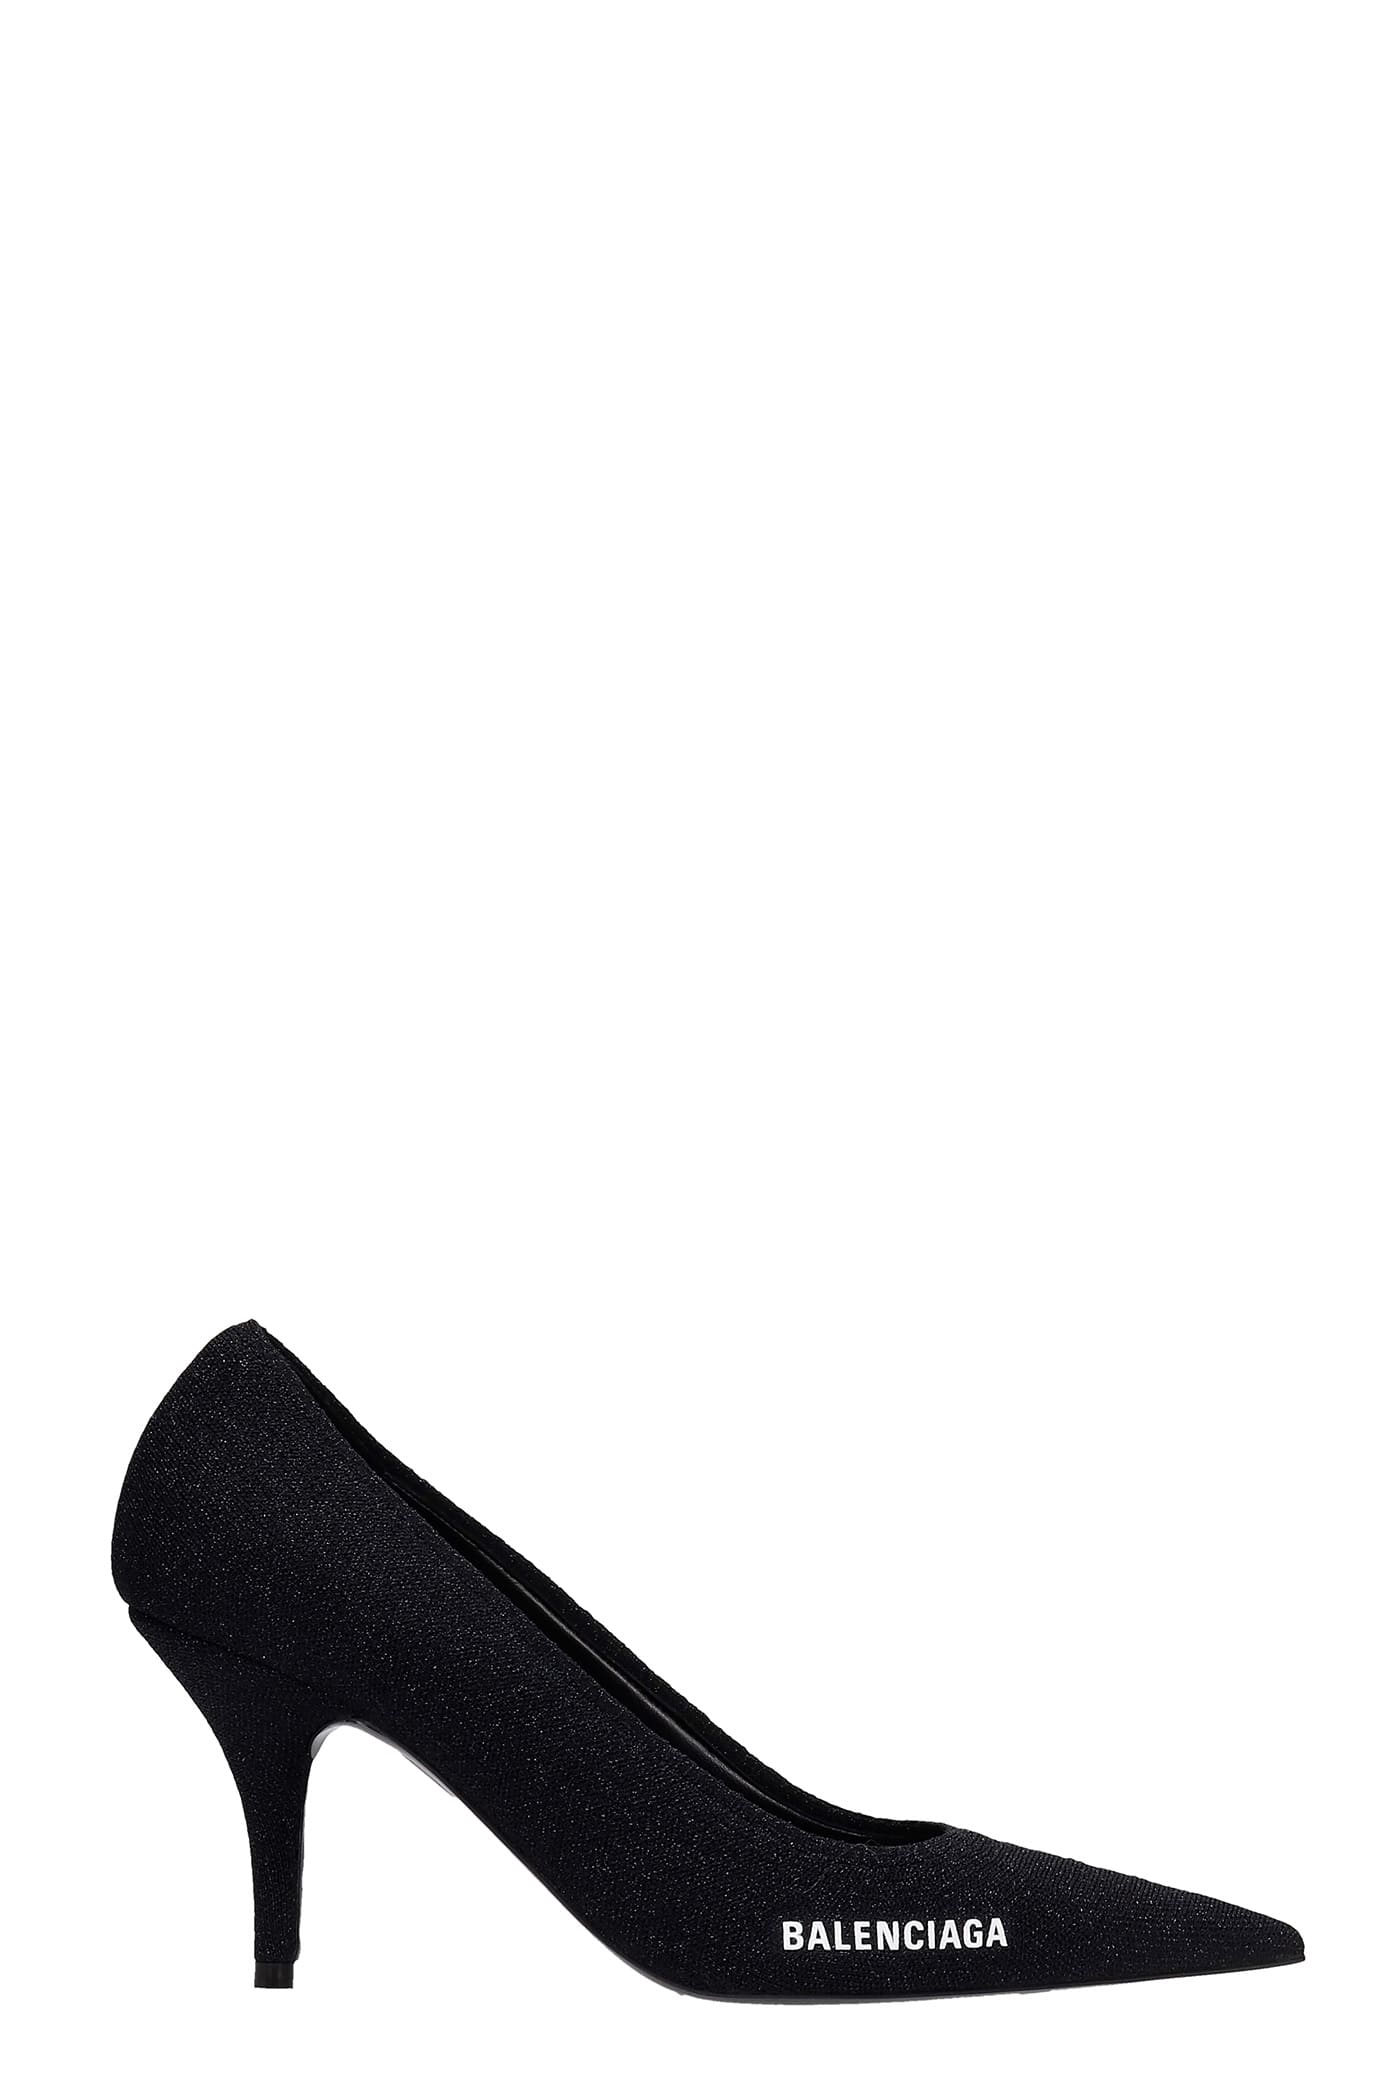 Buy Balenciaga Pumps In Black Synthetic Fibers online, shop Balenciaga shoes with free shipping